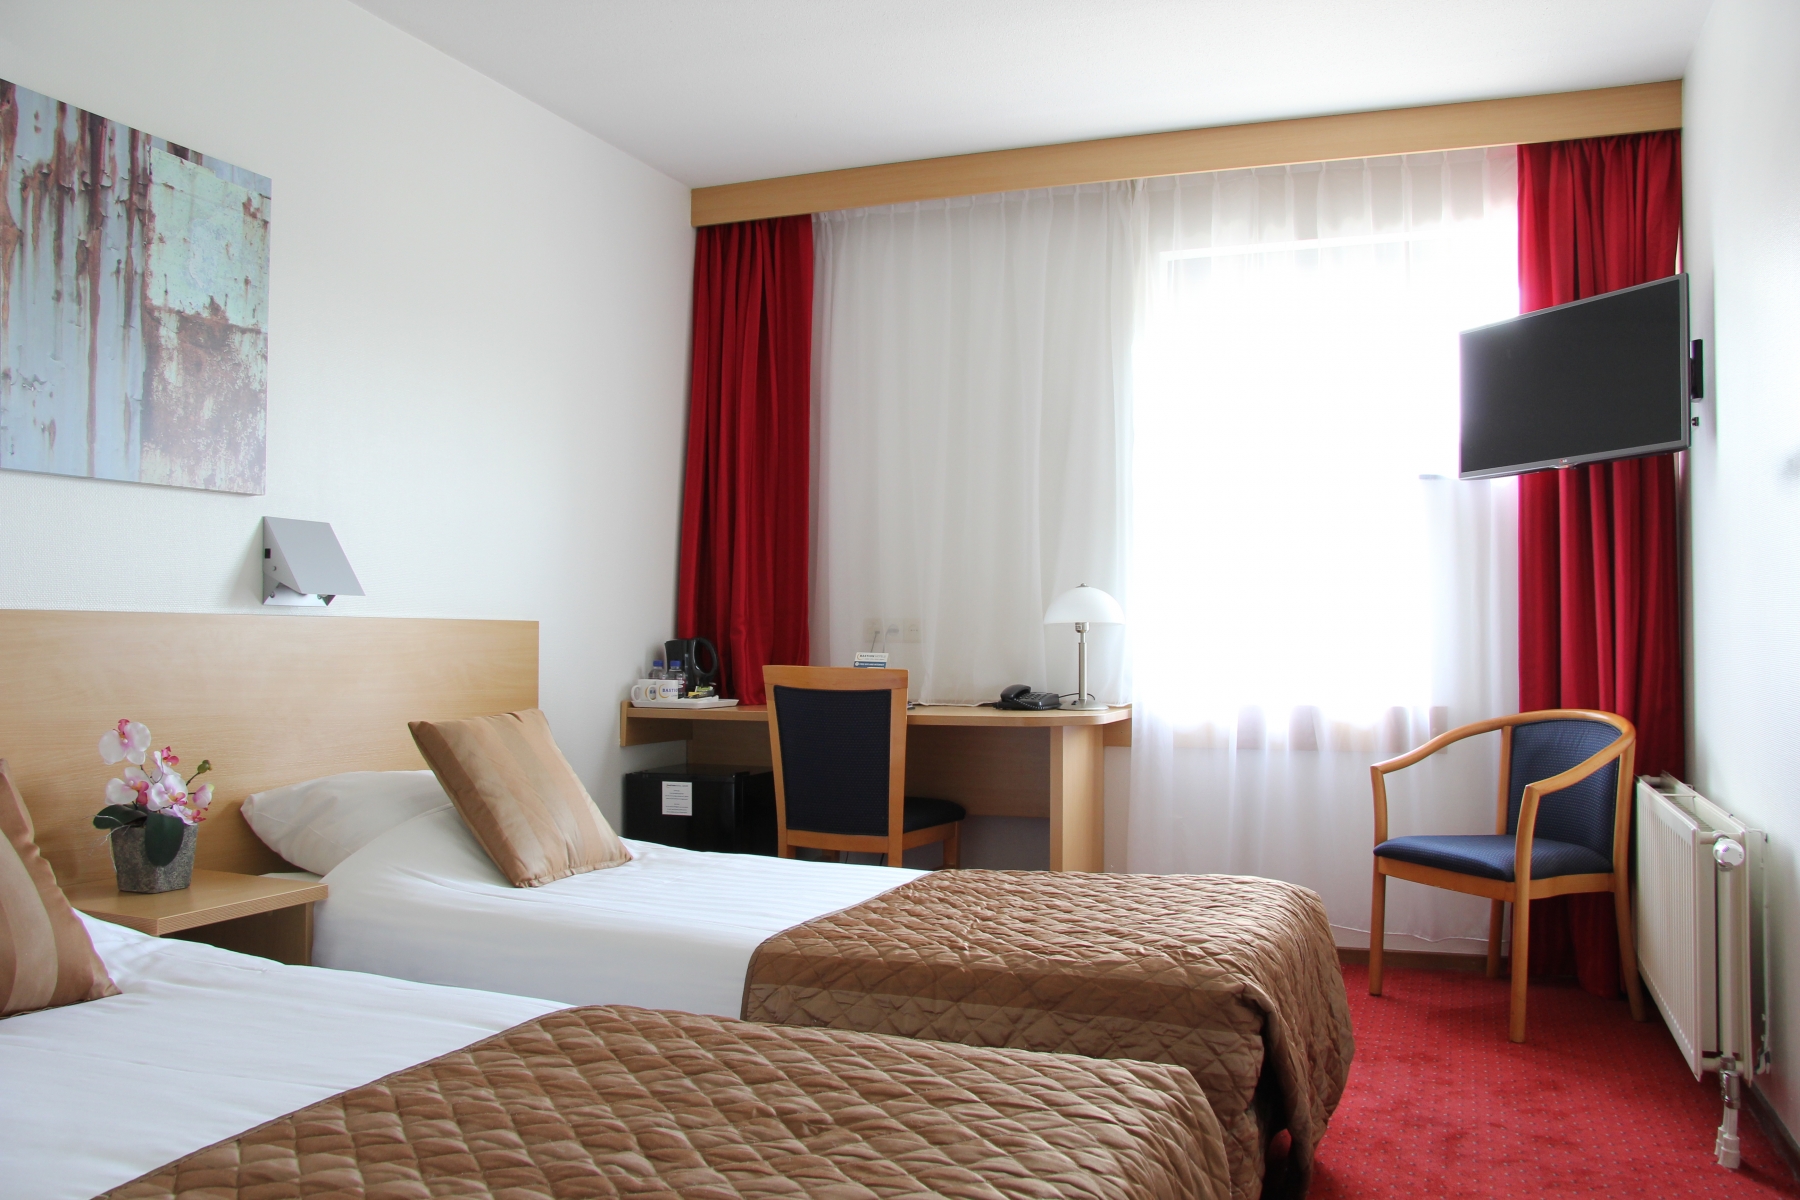 Bastion Hotel Nijmegen <br/>64.00 ew <br/> <a href='http://vakantieoplossing.nl/outpage/?id=60e1f8d55b0cdbb20206c7c9fd0f416c' target='_blank'>View Details</a>